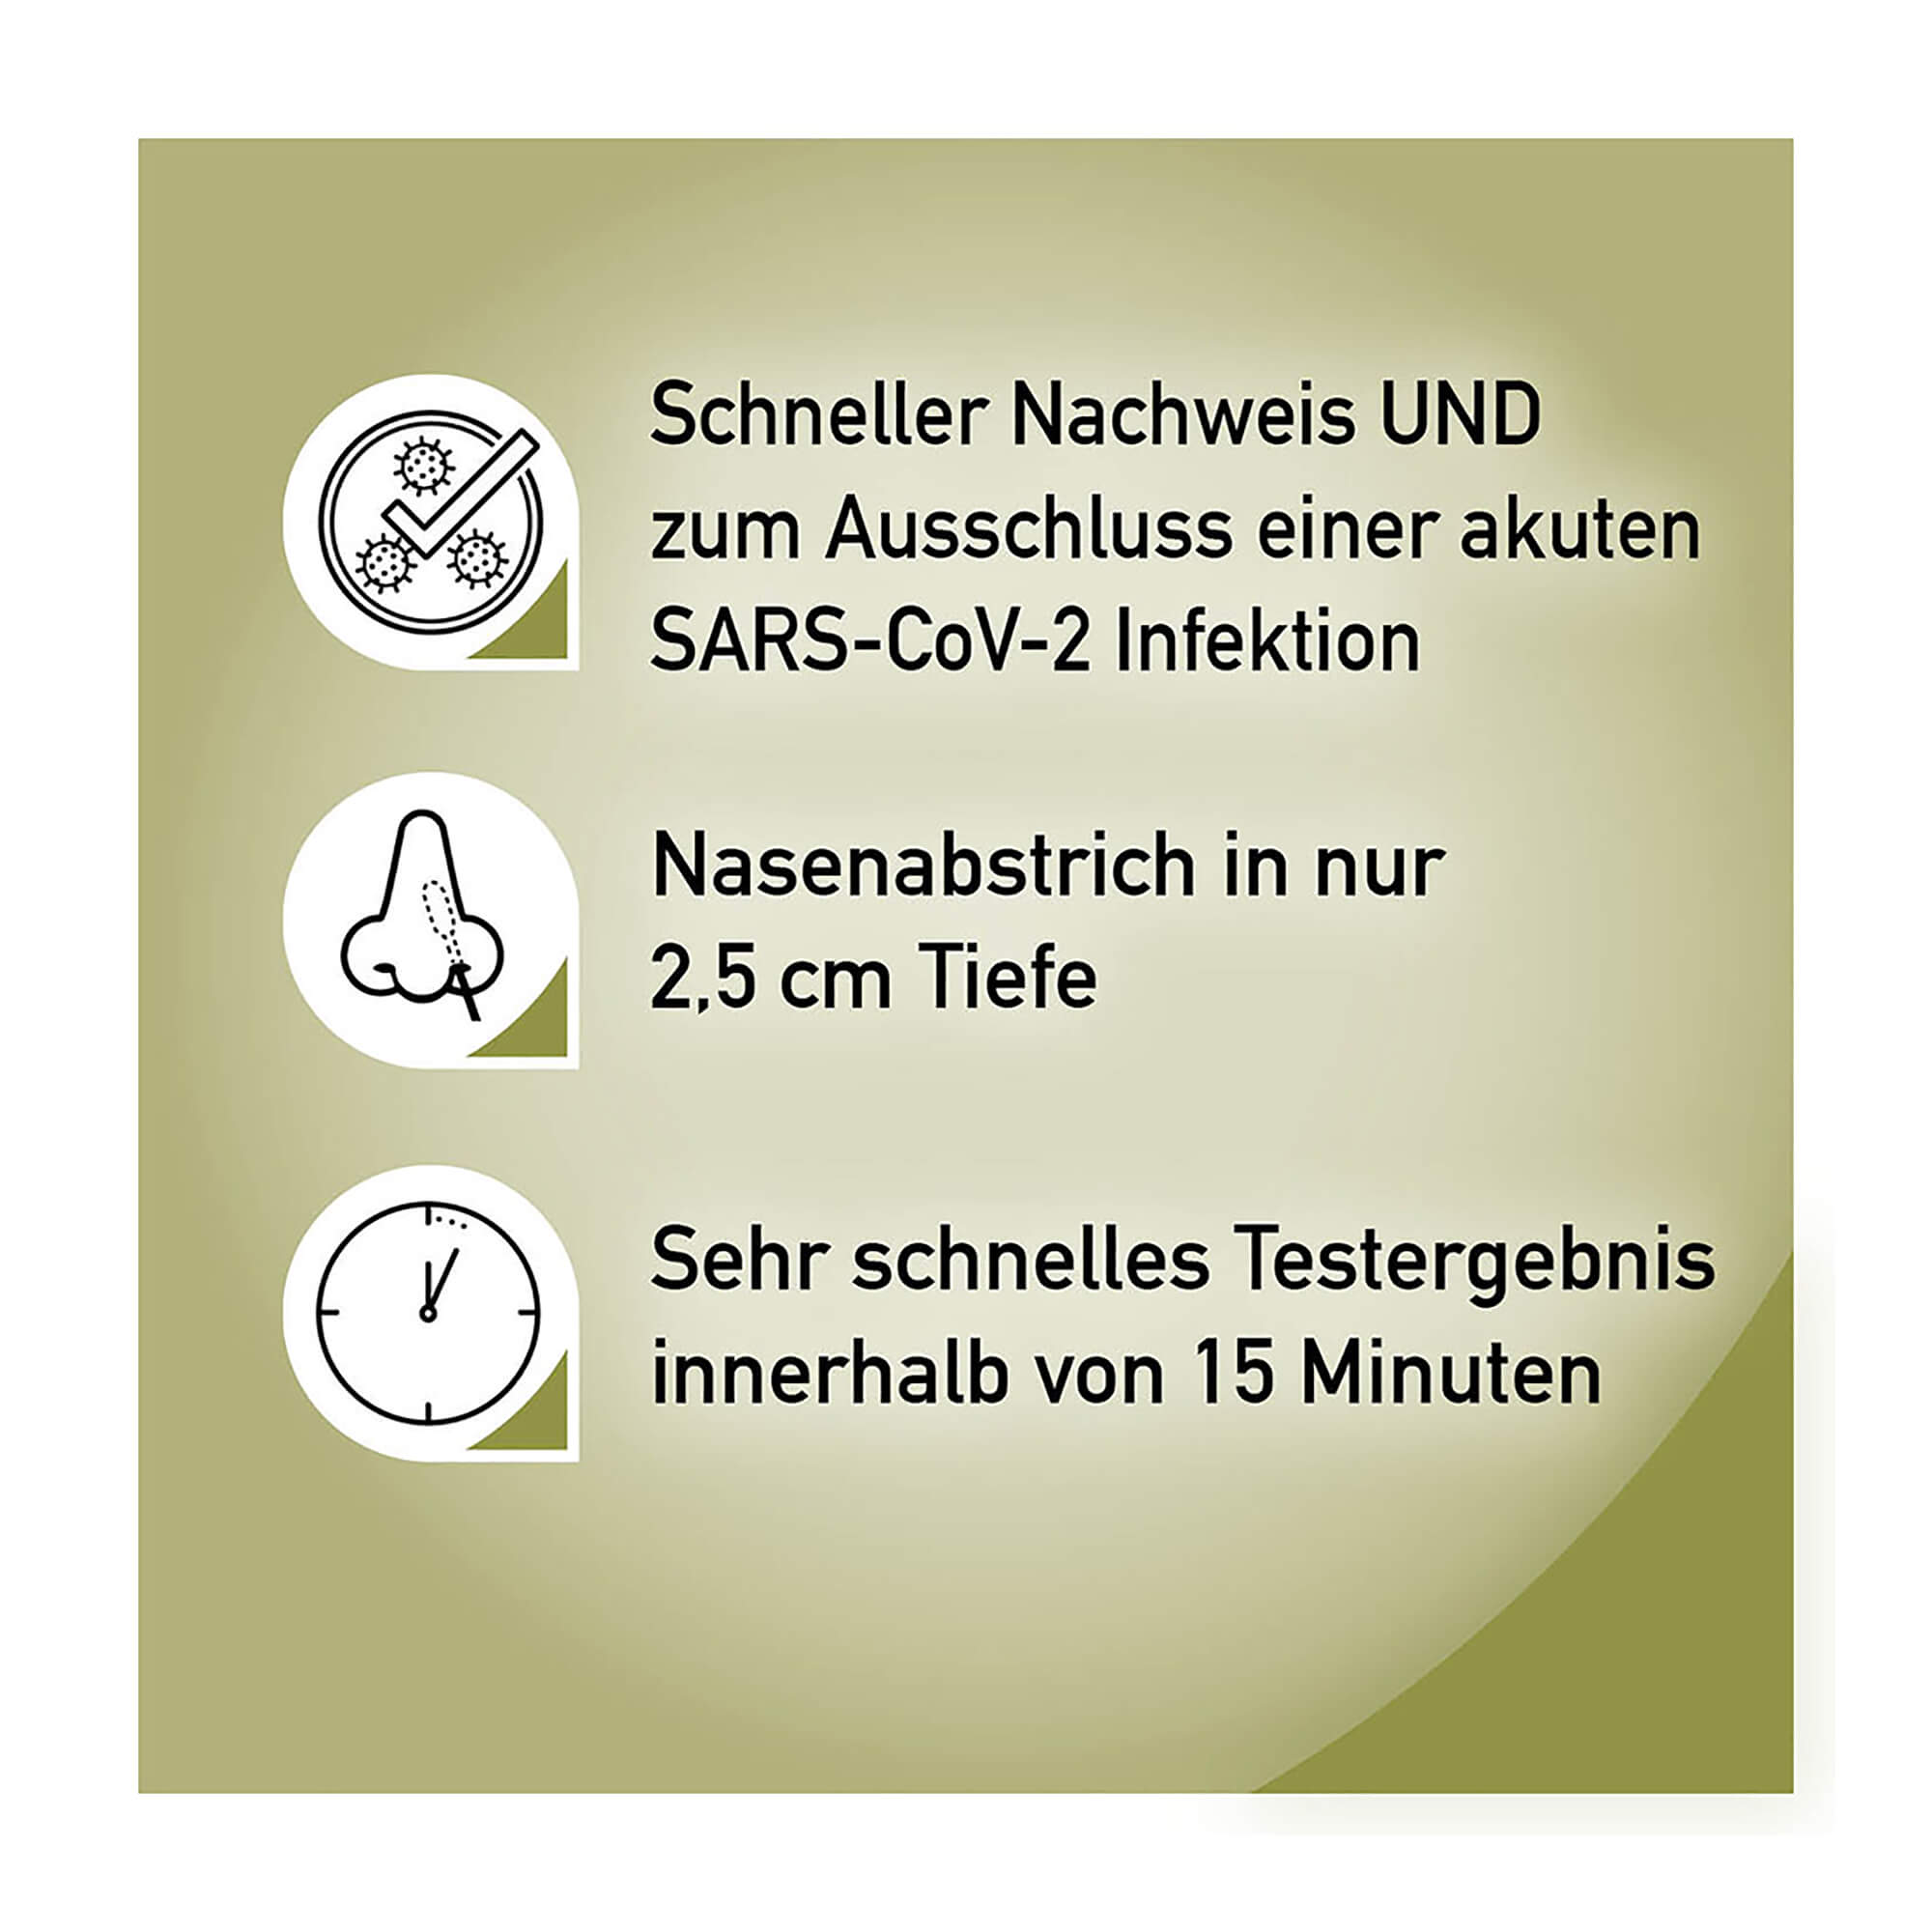 Medicovid-AG SARS-CoV-2 Antigen Schnelltest Nase